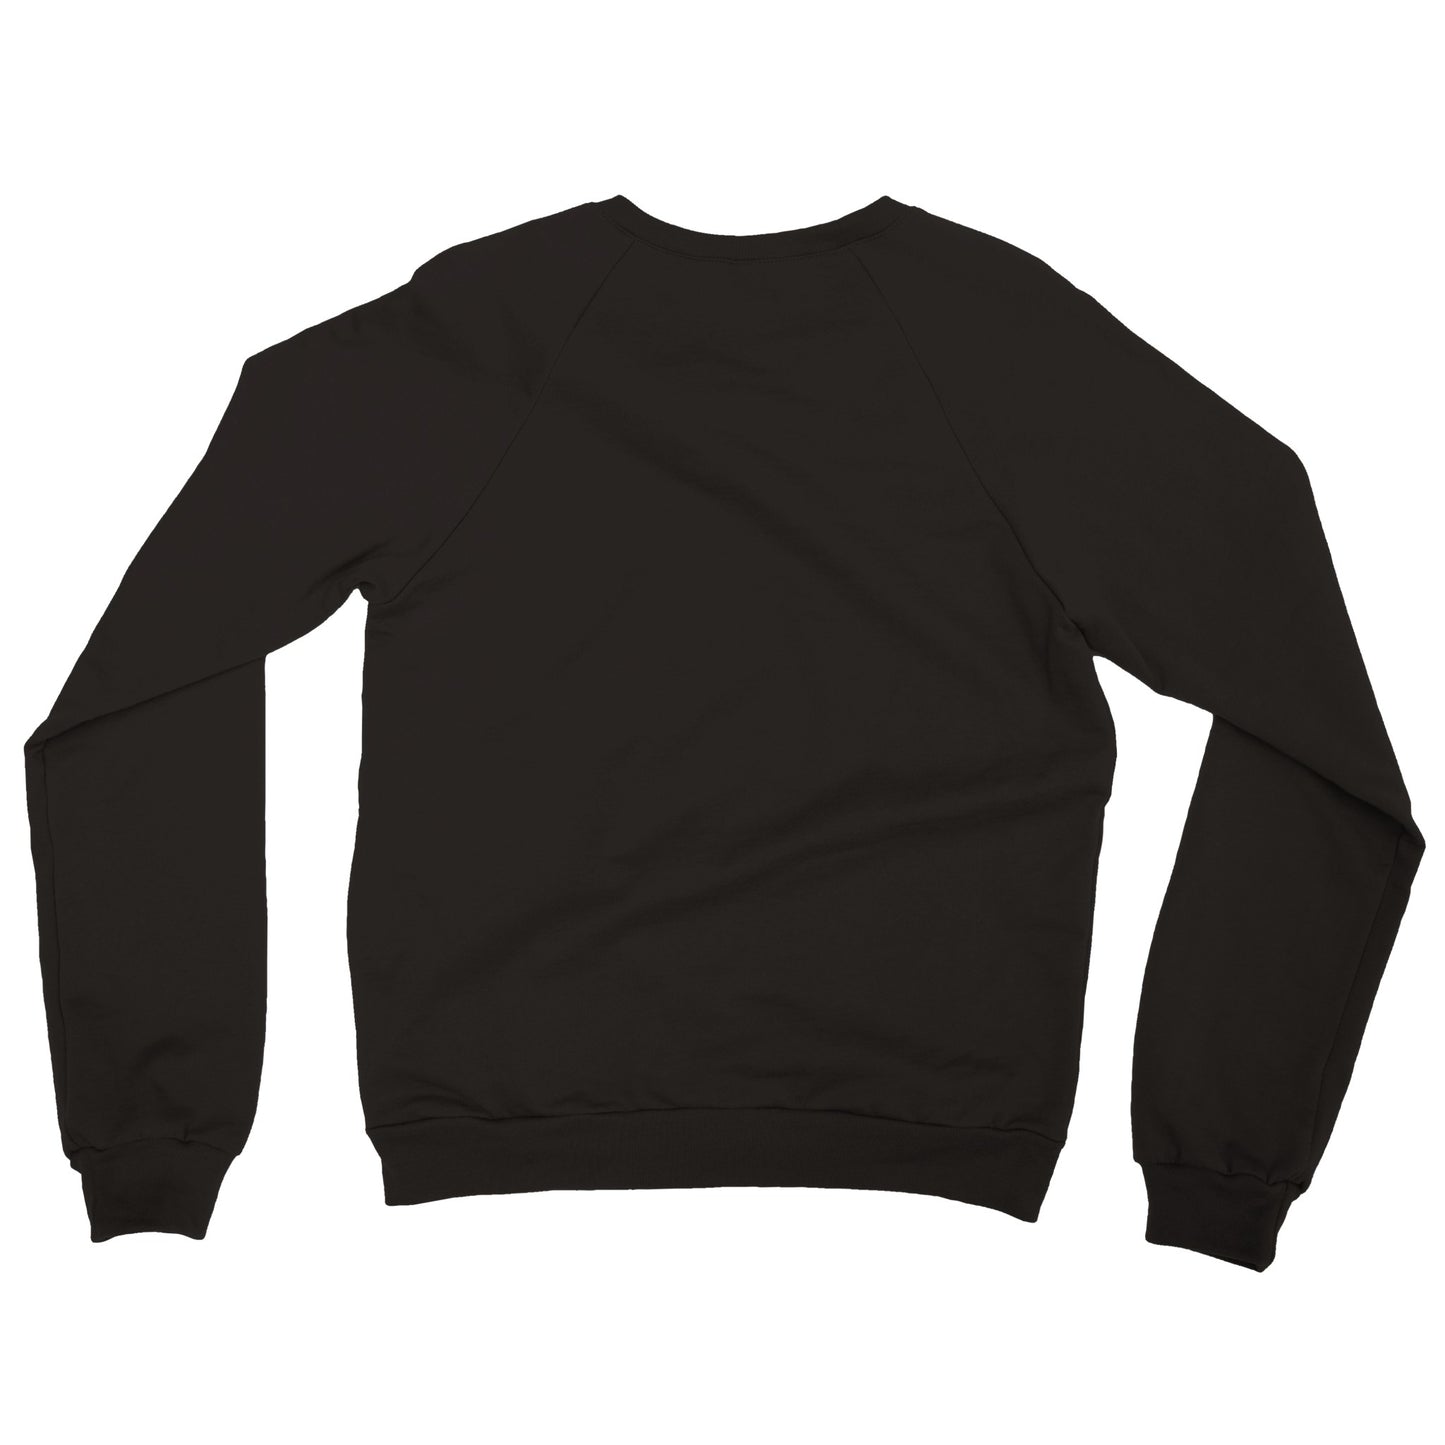 Daily Drop Premium Black Crewneck Sweatshirt